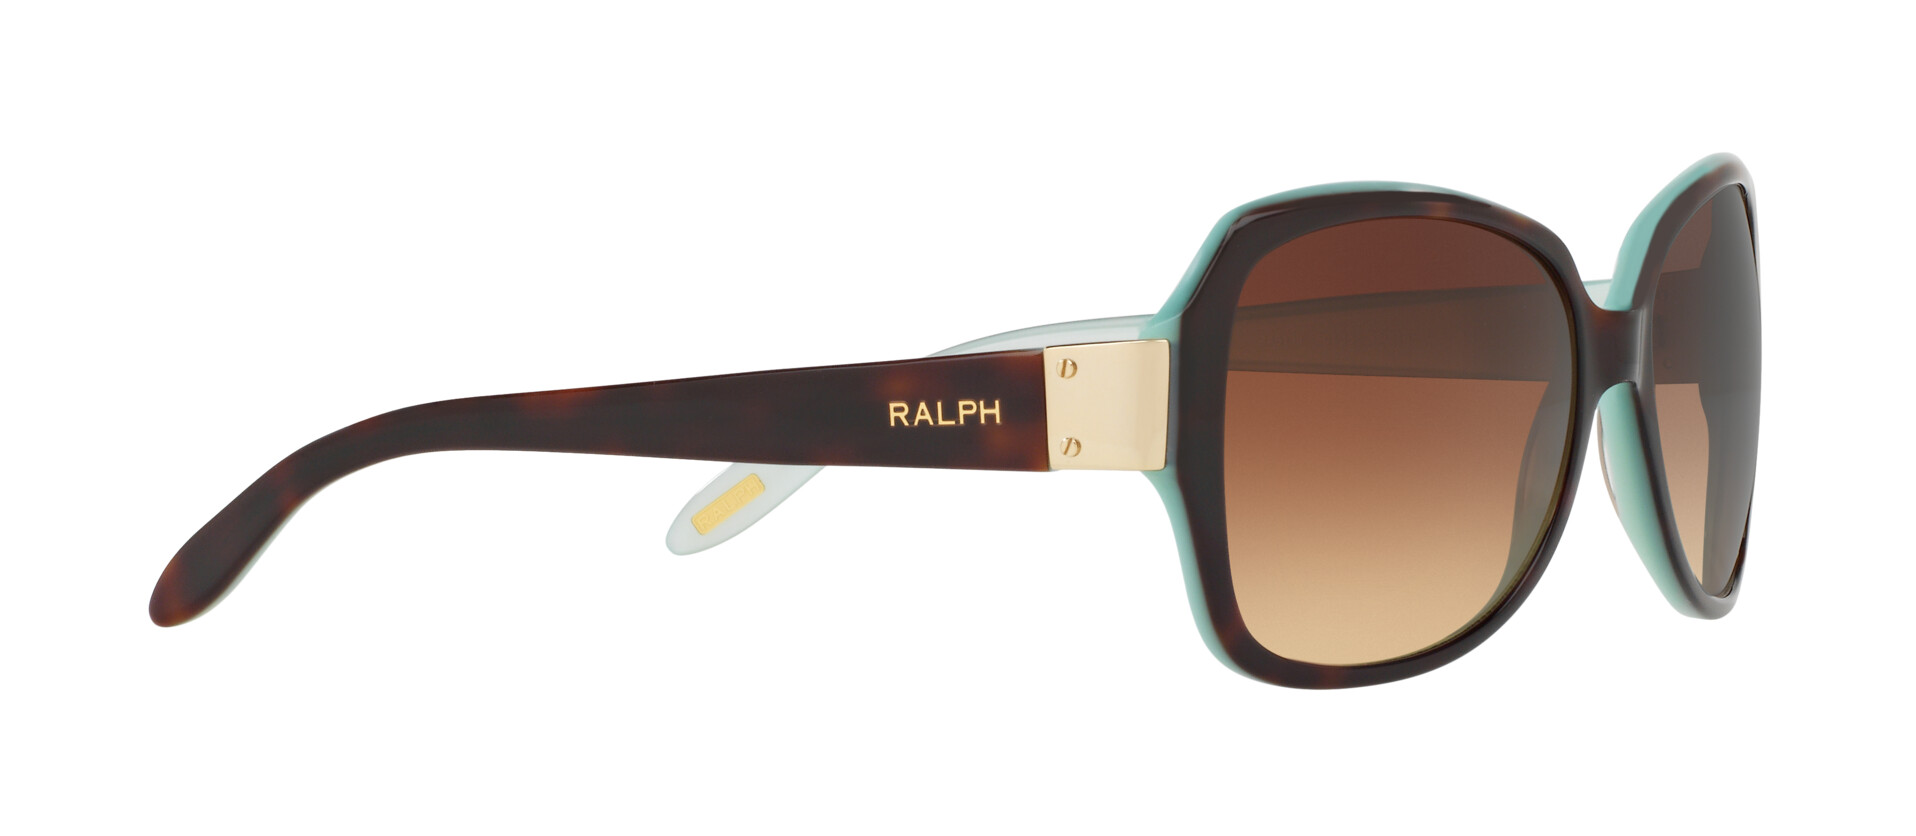 [products.image.promotional03] Ralph Lauren 0RA5138 601/13 Sonnenbrille